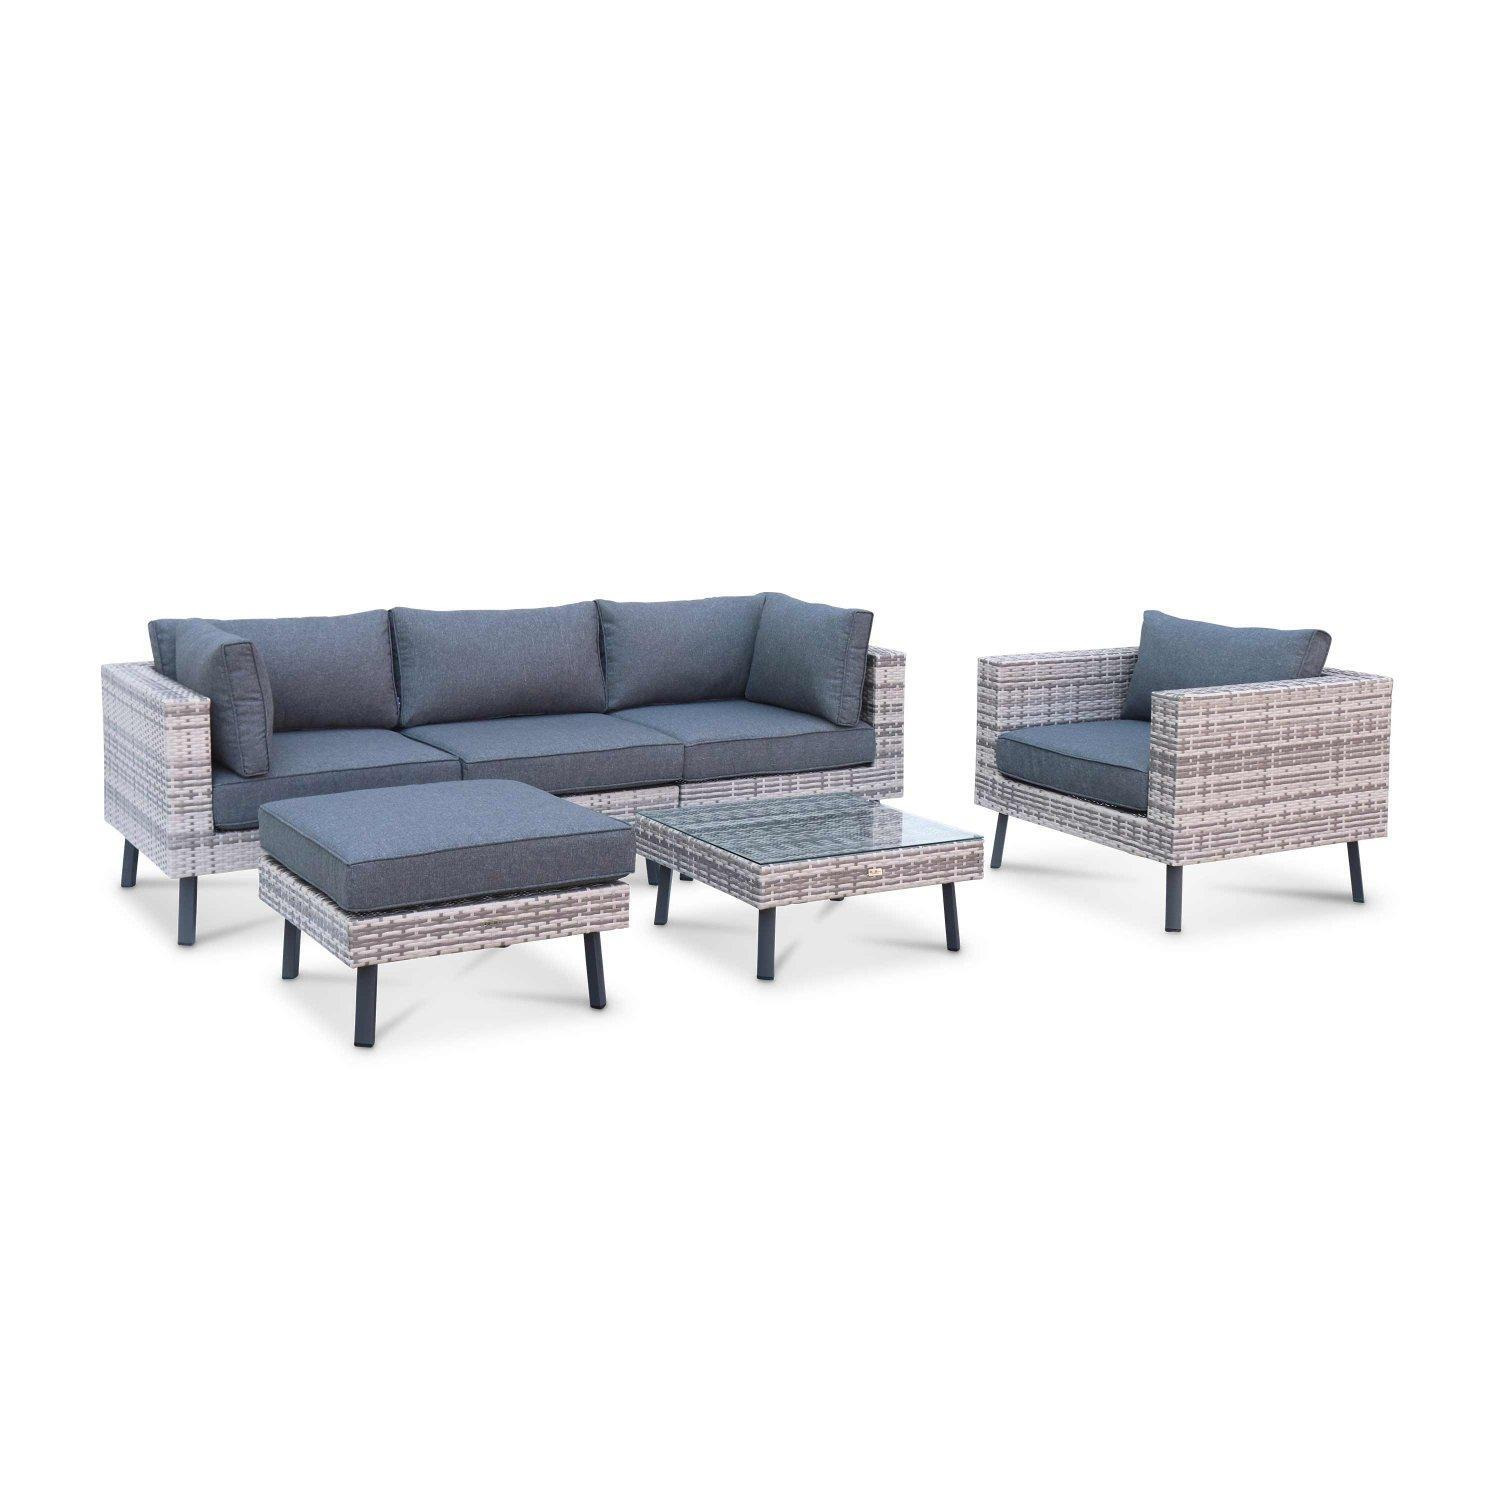 5-seater Elevated Polyrattan Garden Sofa Set With Stylish Legs - image 1